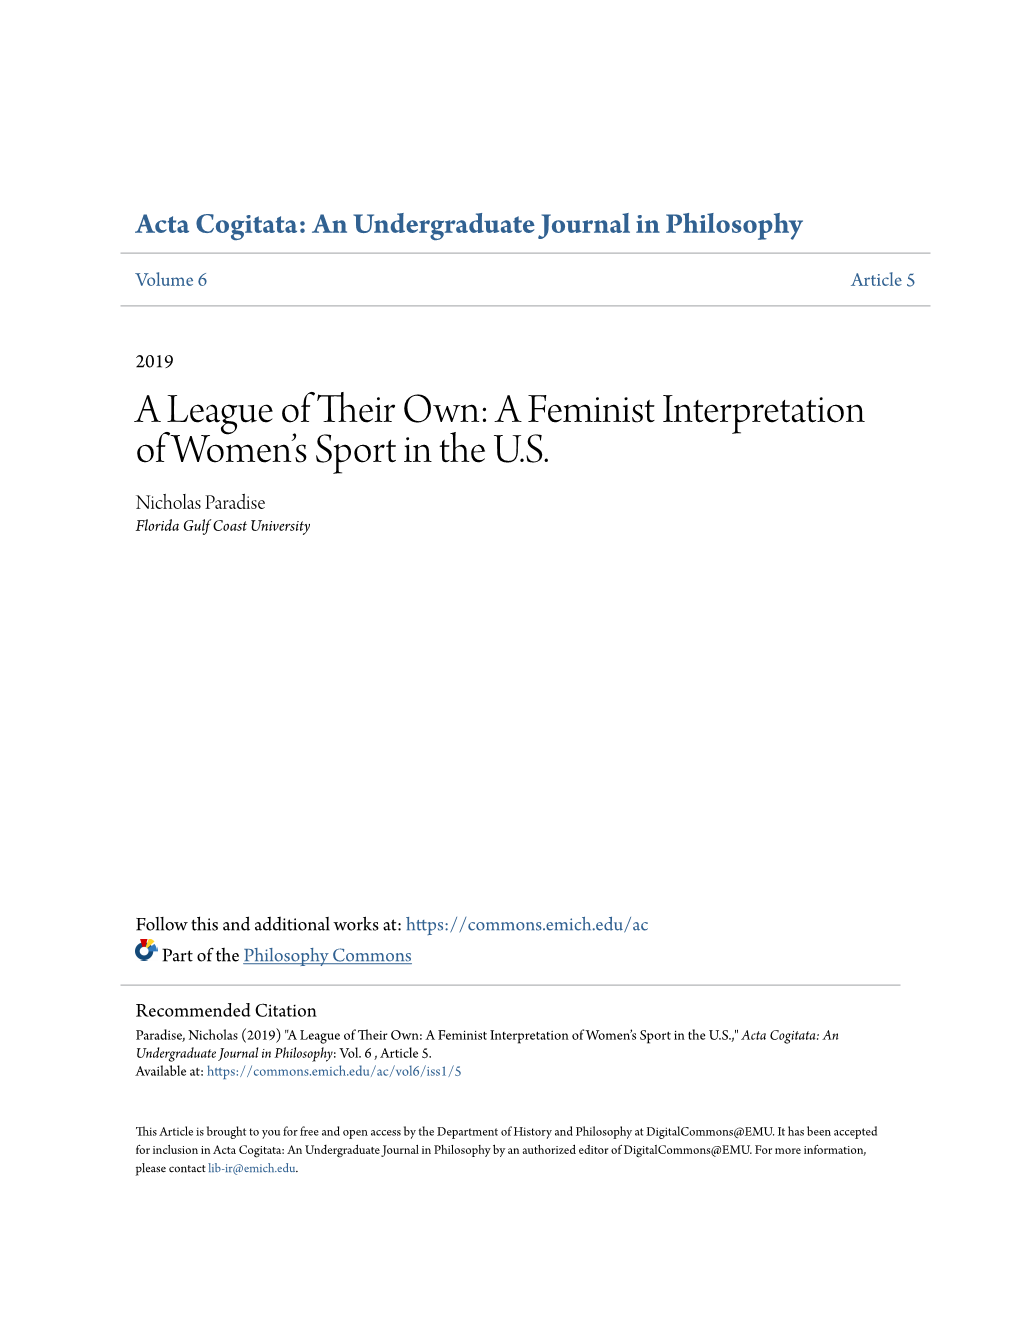 A League of Their Own: a Feminist Interpretation of Women’S Sport in the U.S